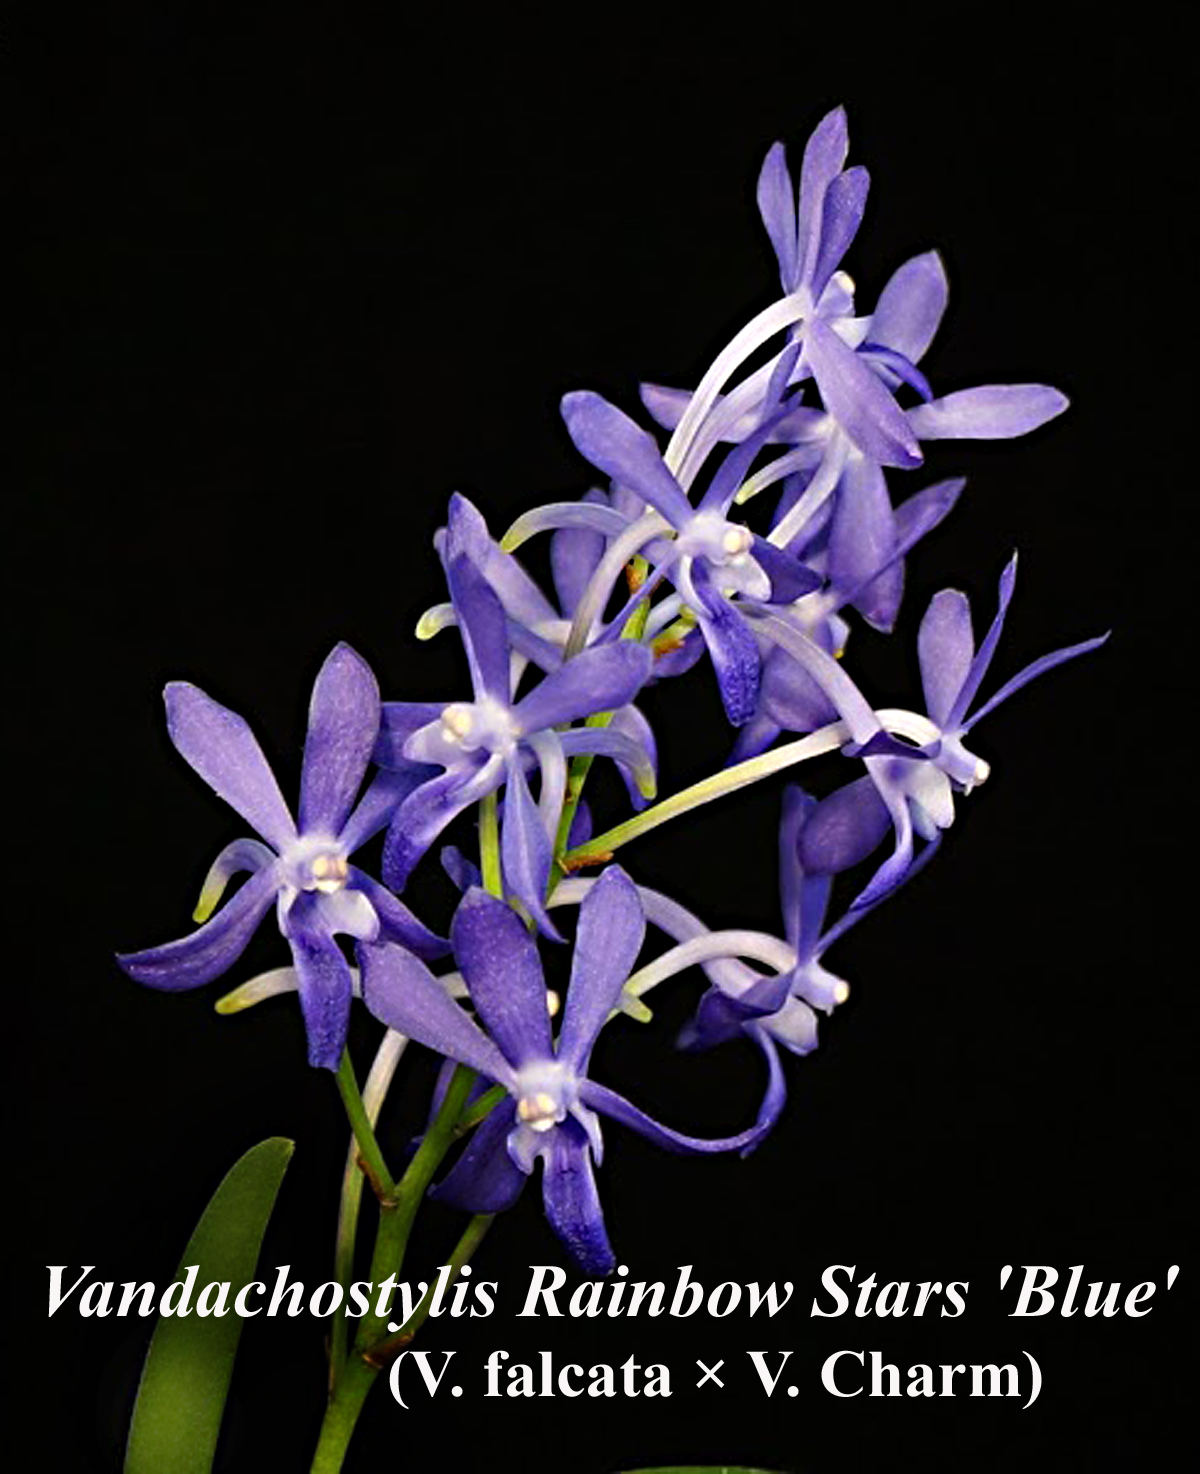 Vandachostylis Rainbow Stars 'Blue'.